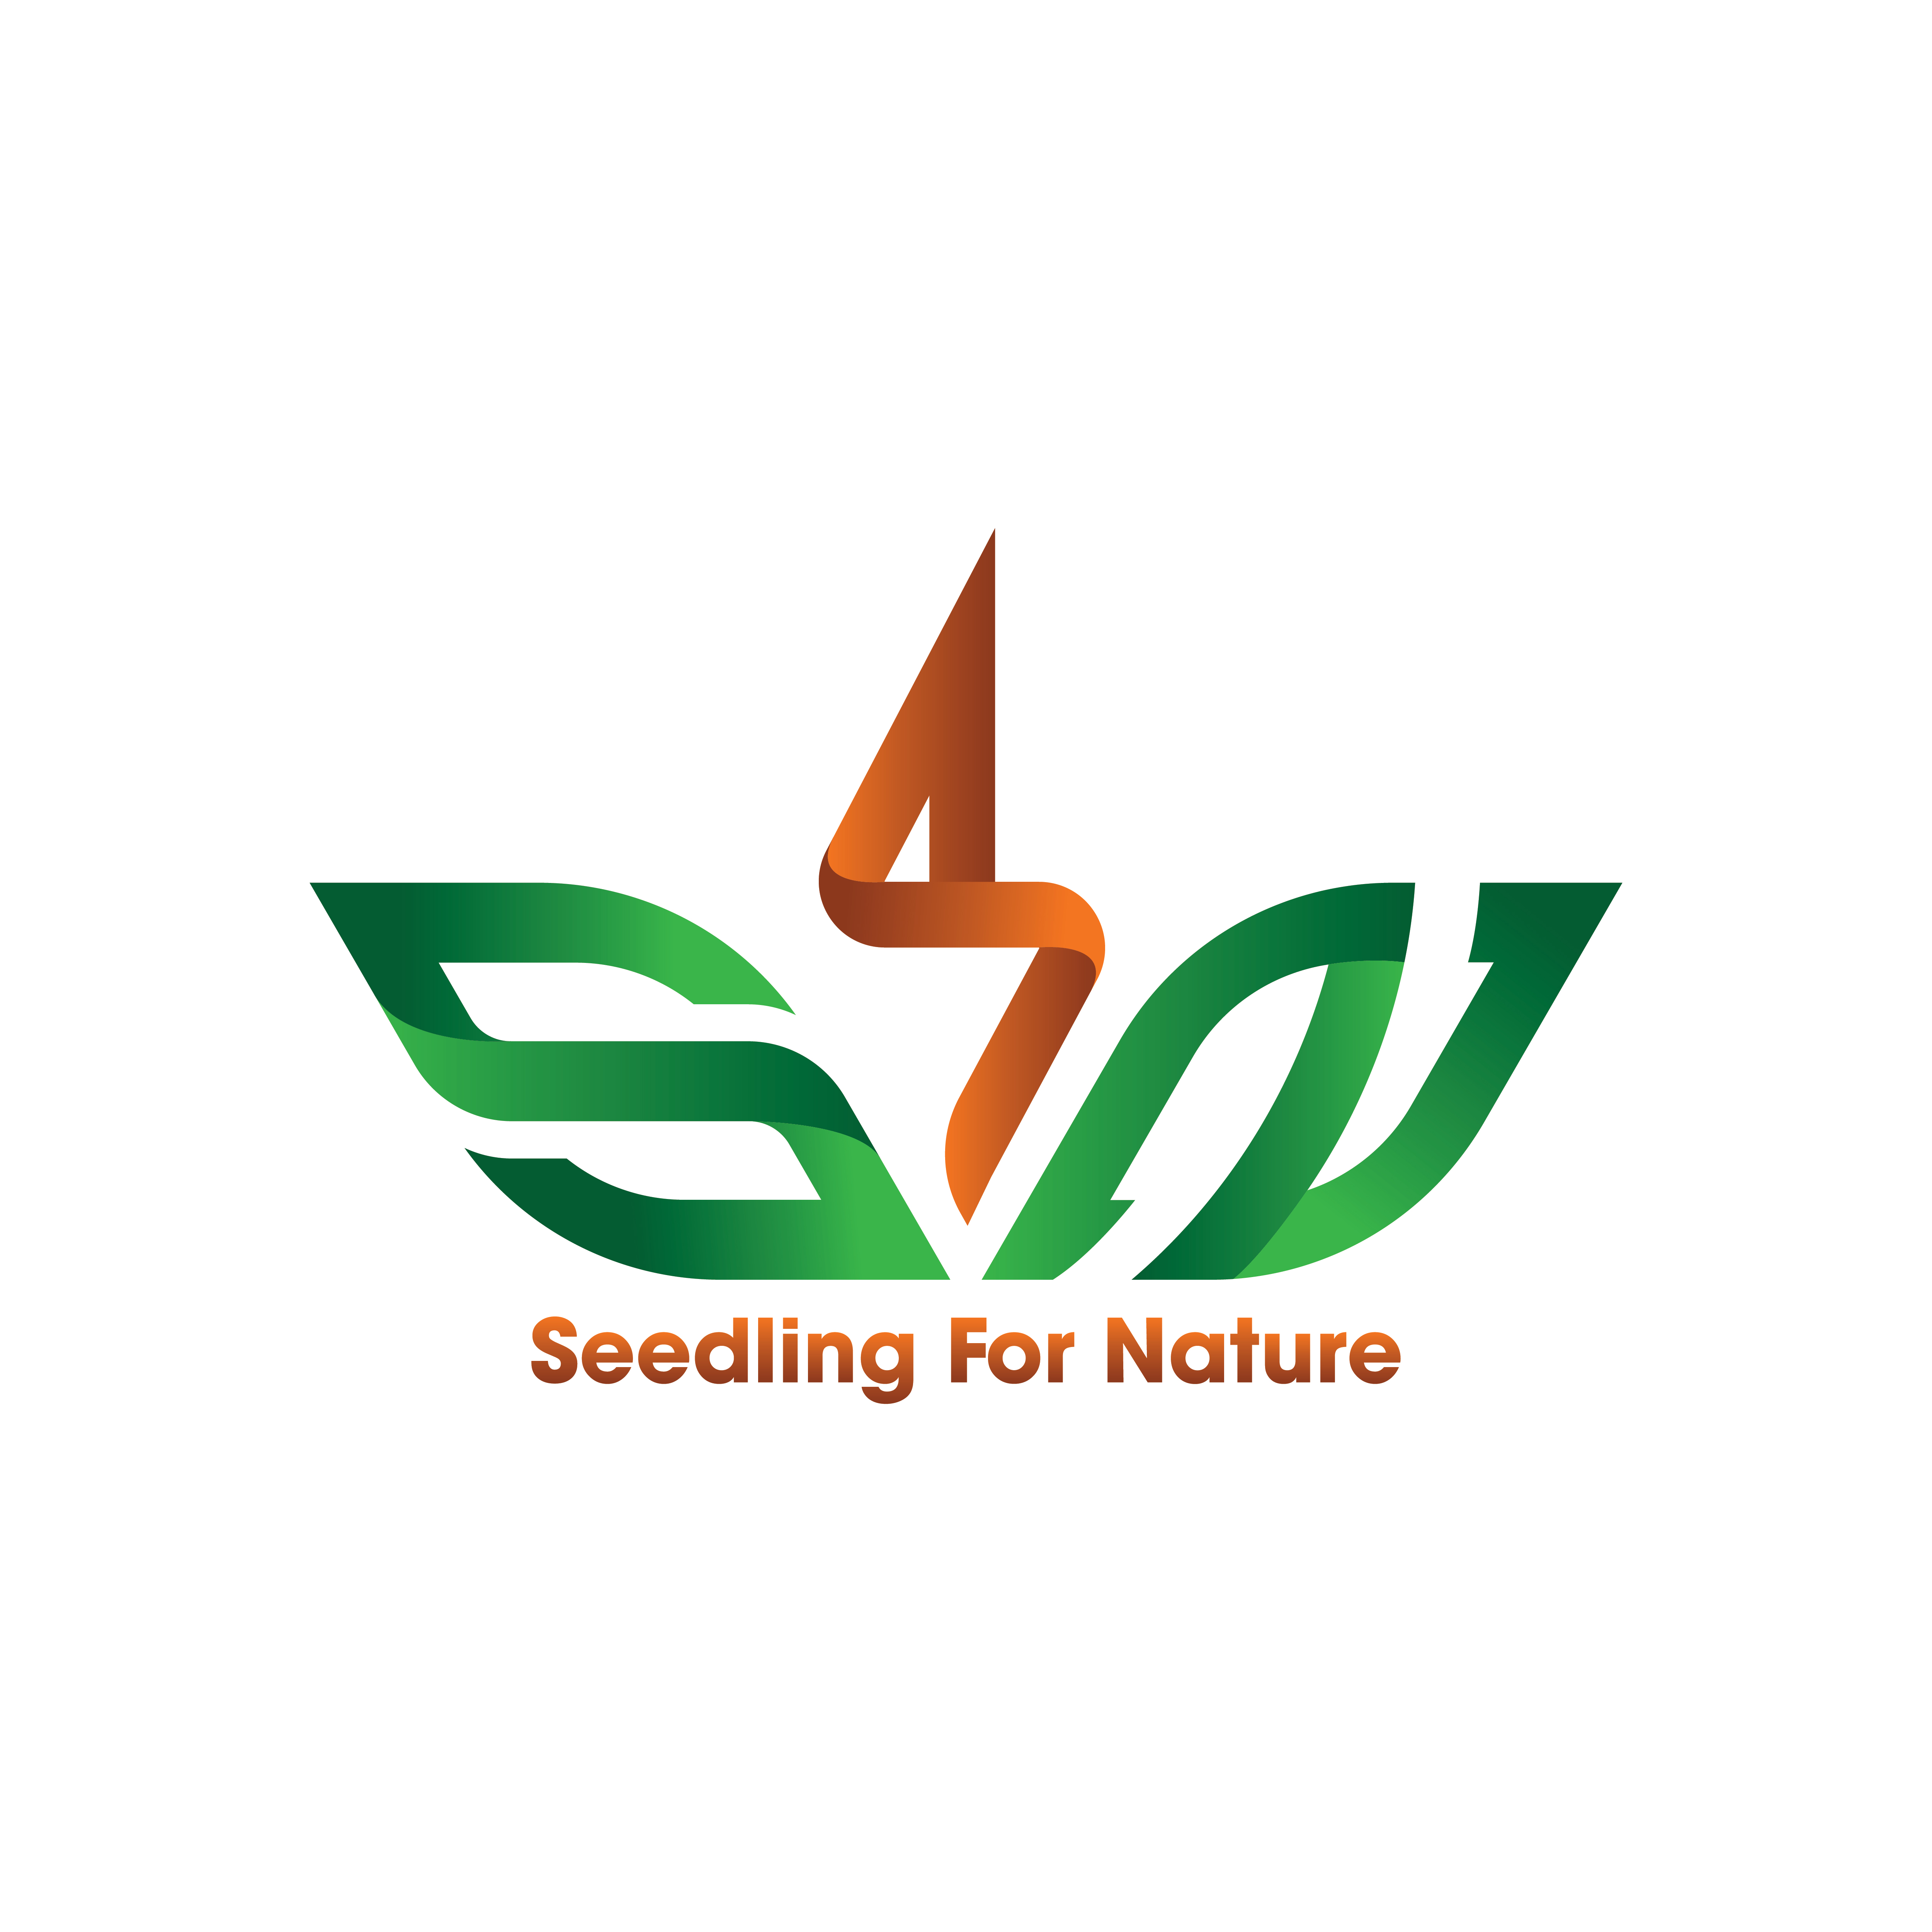 S4N - Seedling for Nature